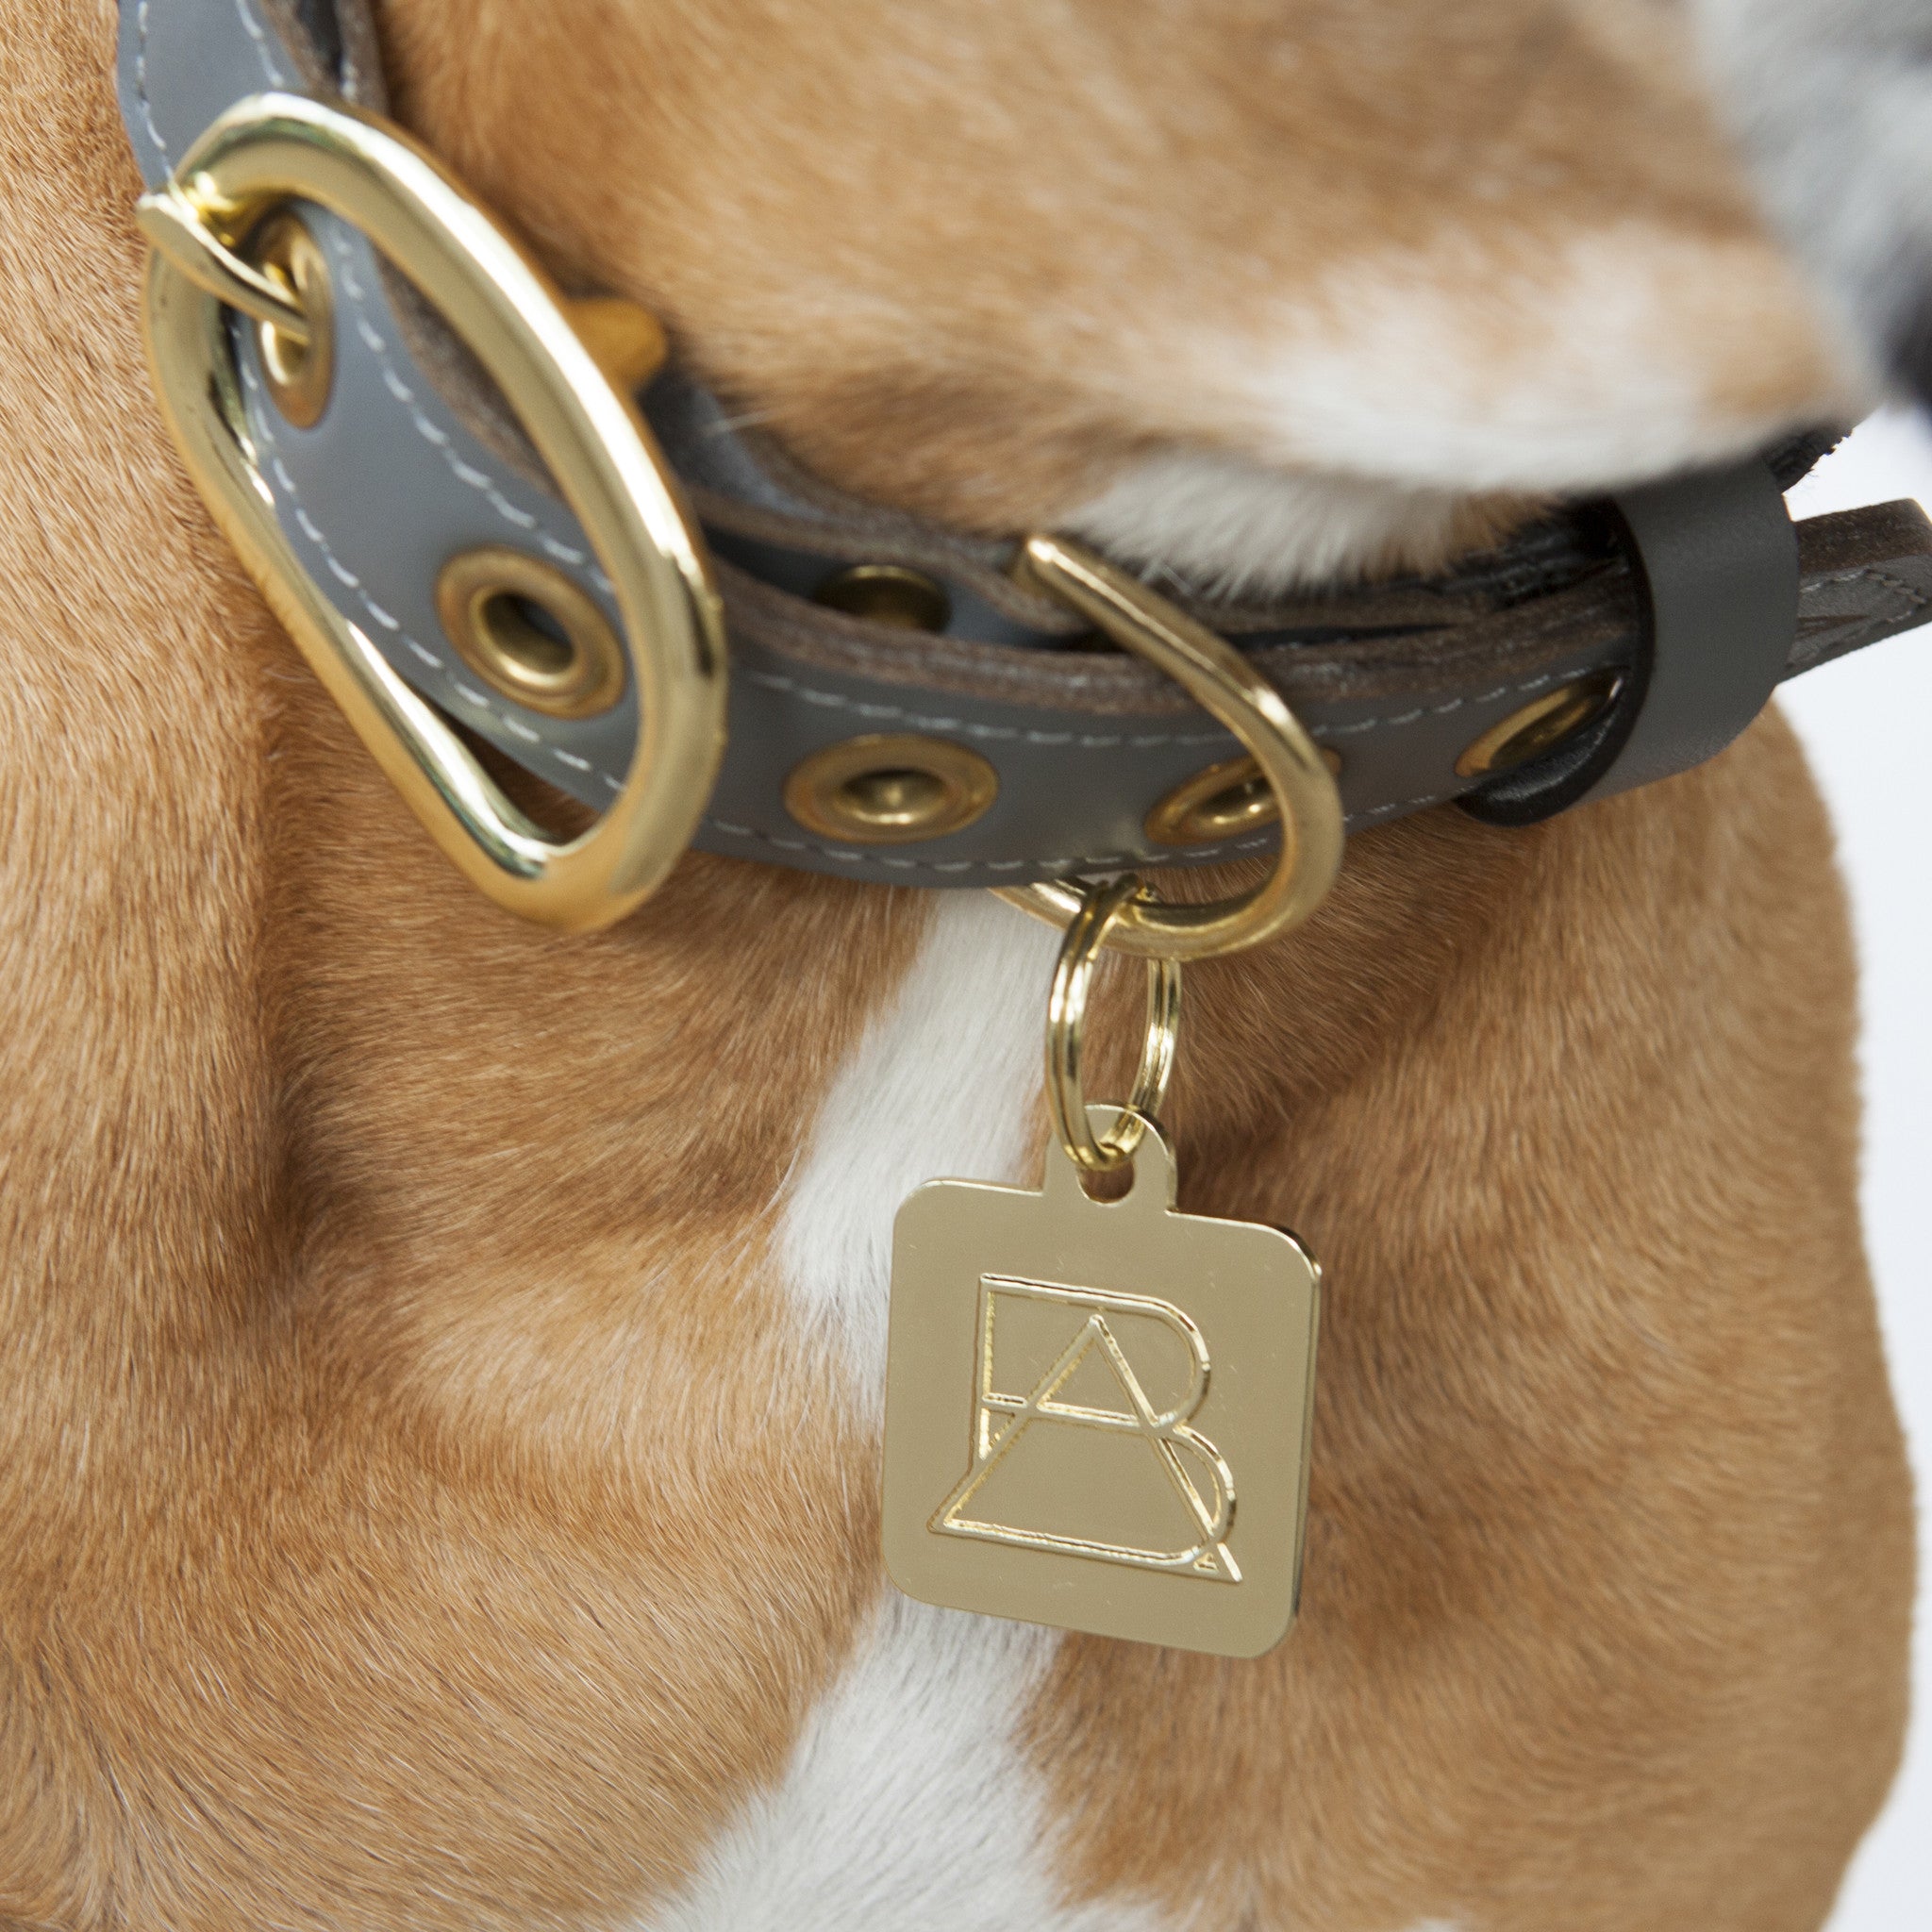 Camo Dog Collar with Chocolate Leather + Ivory Swirl Stitching (on dog)